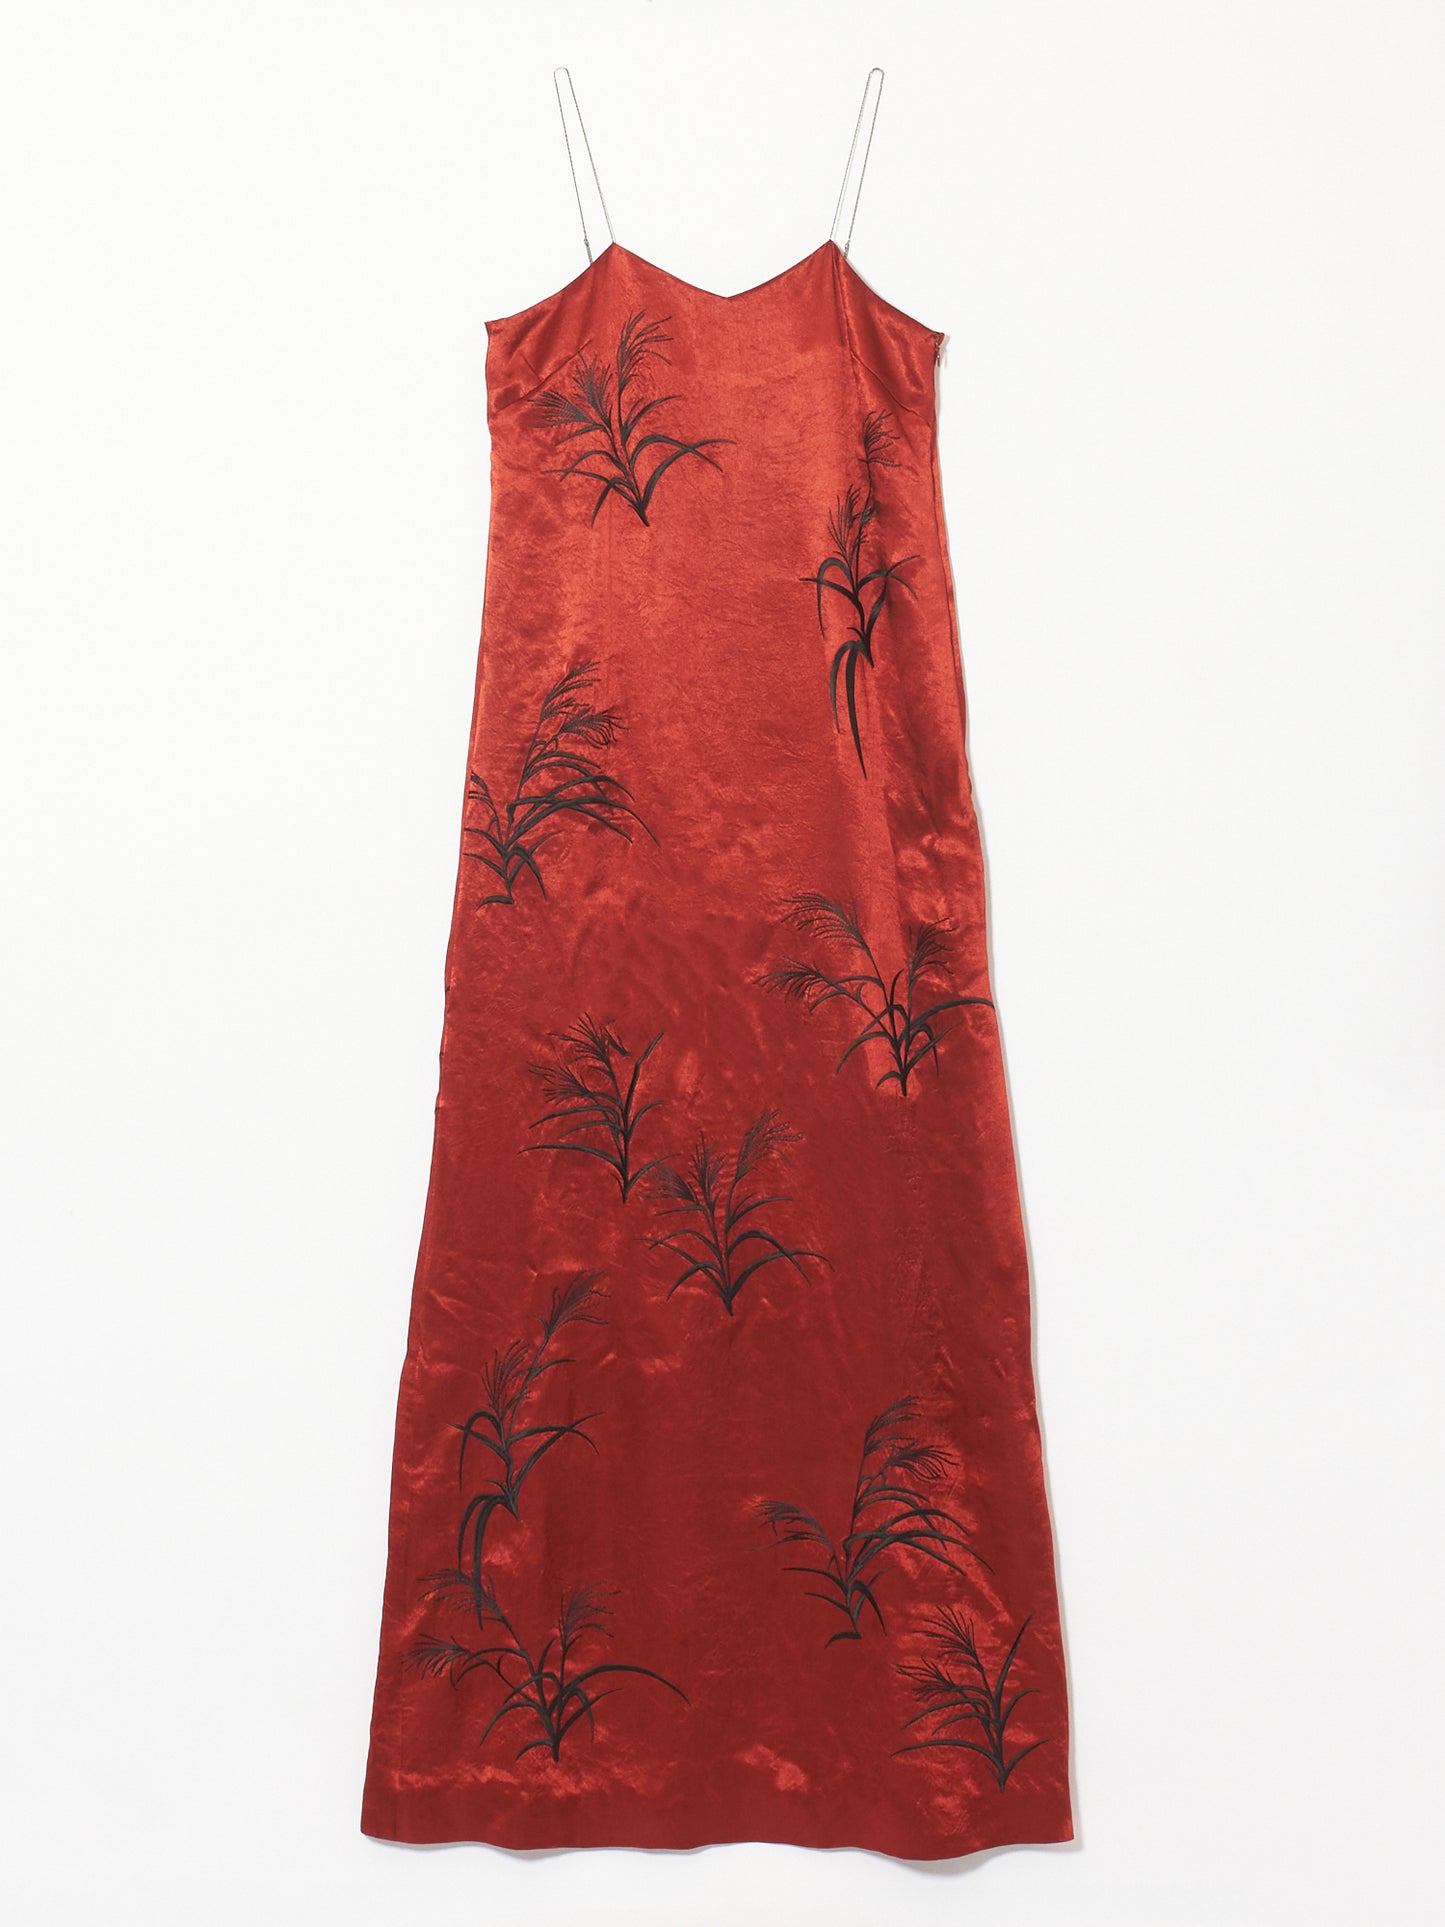 SUSUKI grass red dress